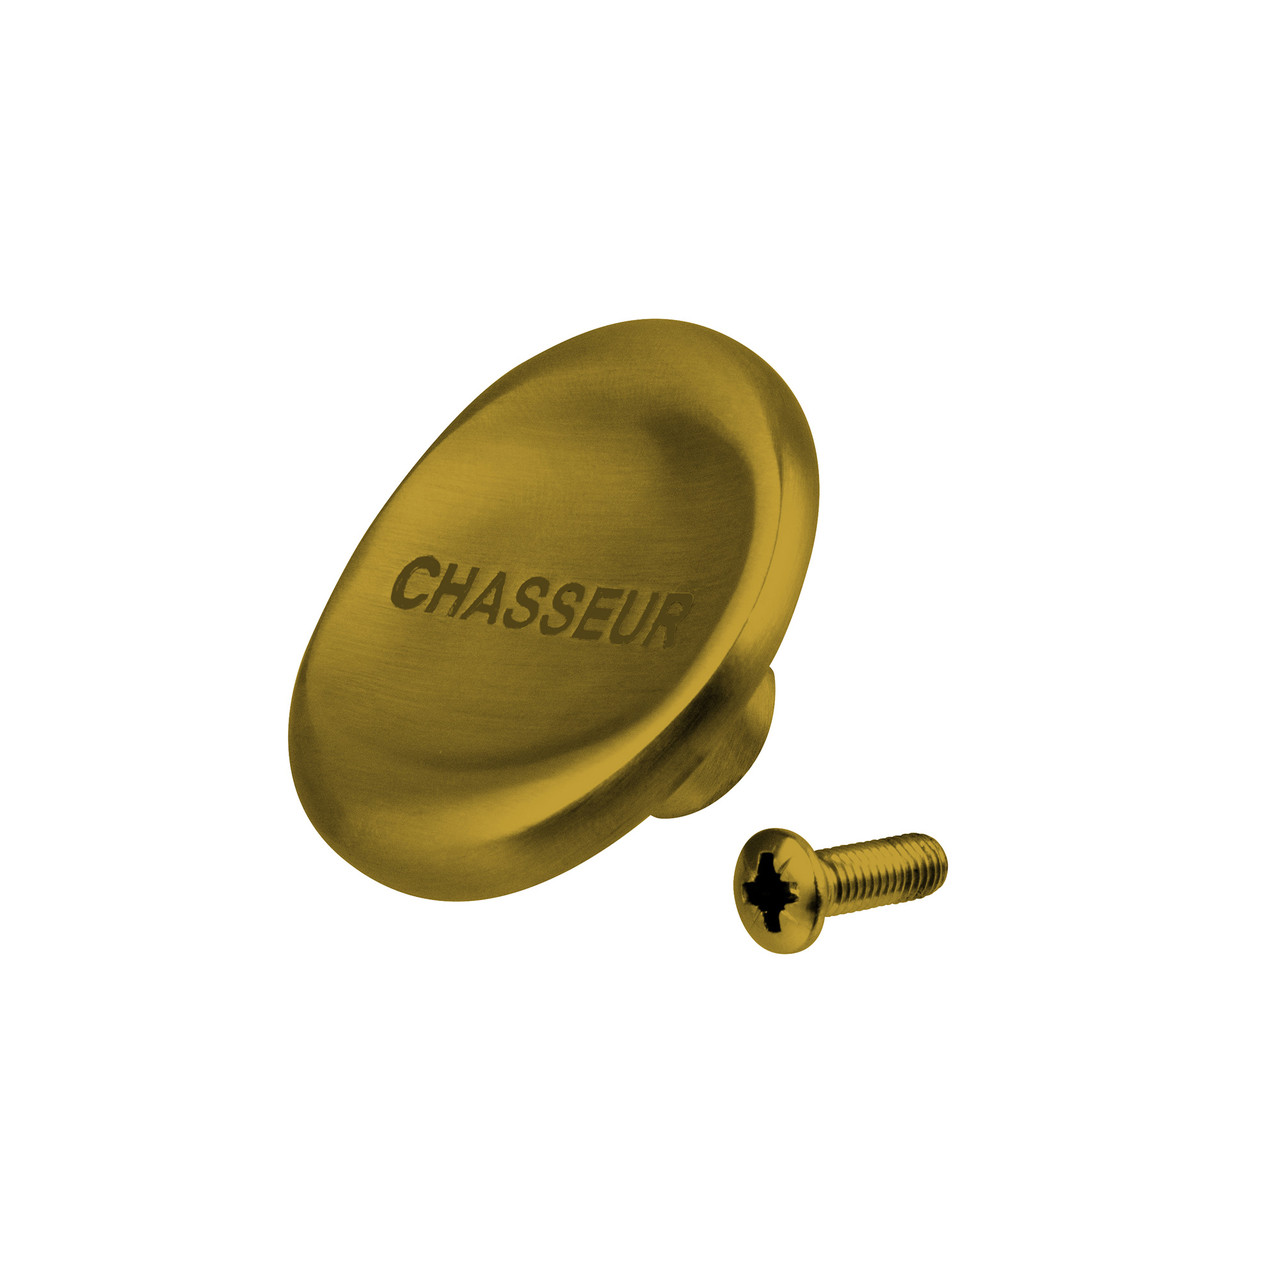 Chasseur 32cm Round French Oven Matte Black 8.8L Casserole Cast Iron